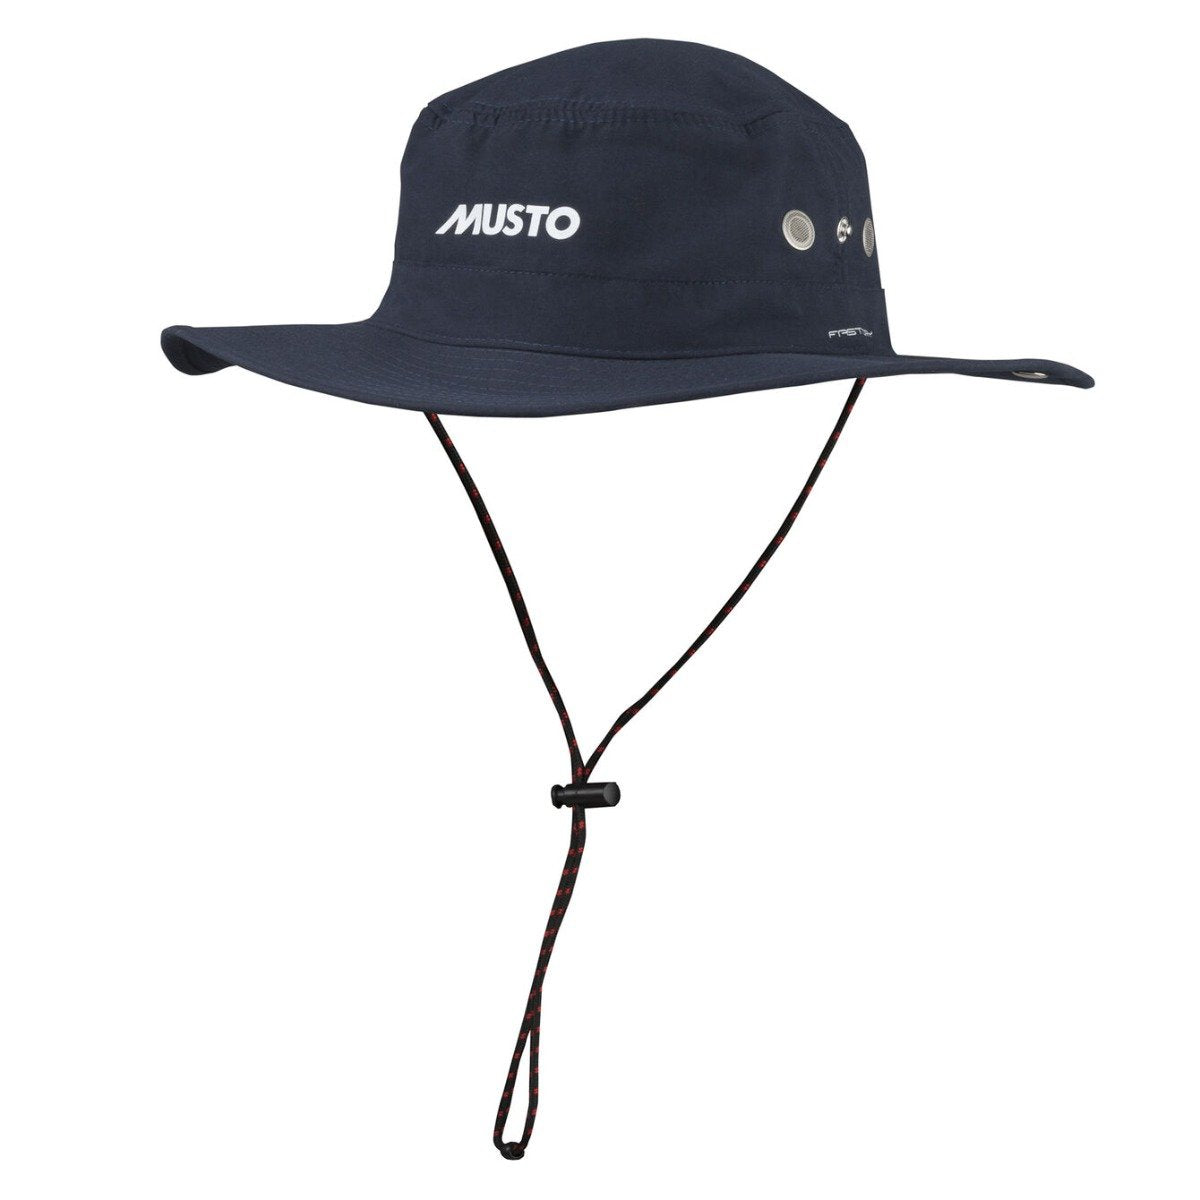 Musto-Evolution-UV-Fast-Drying-Brimmed-Hat